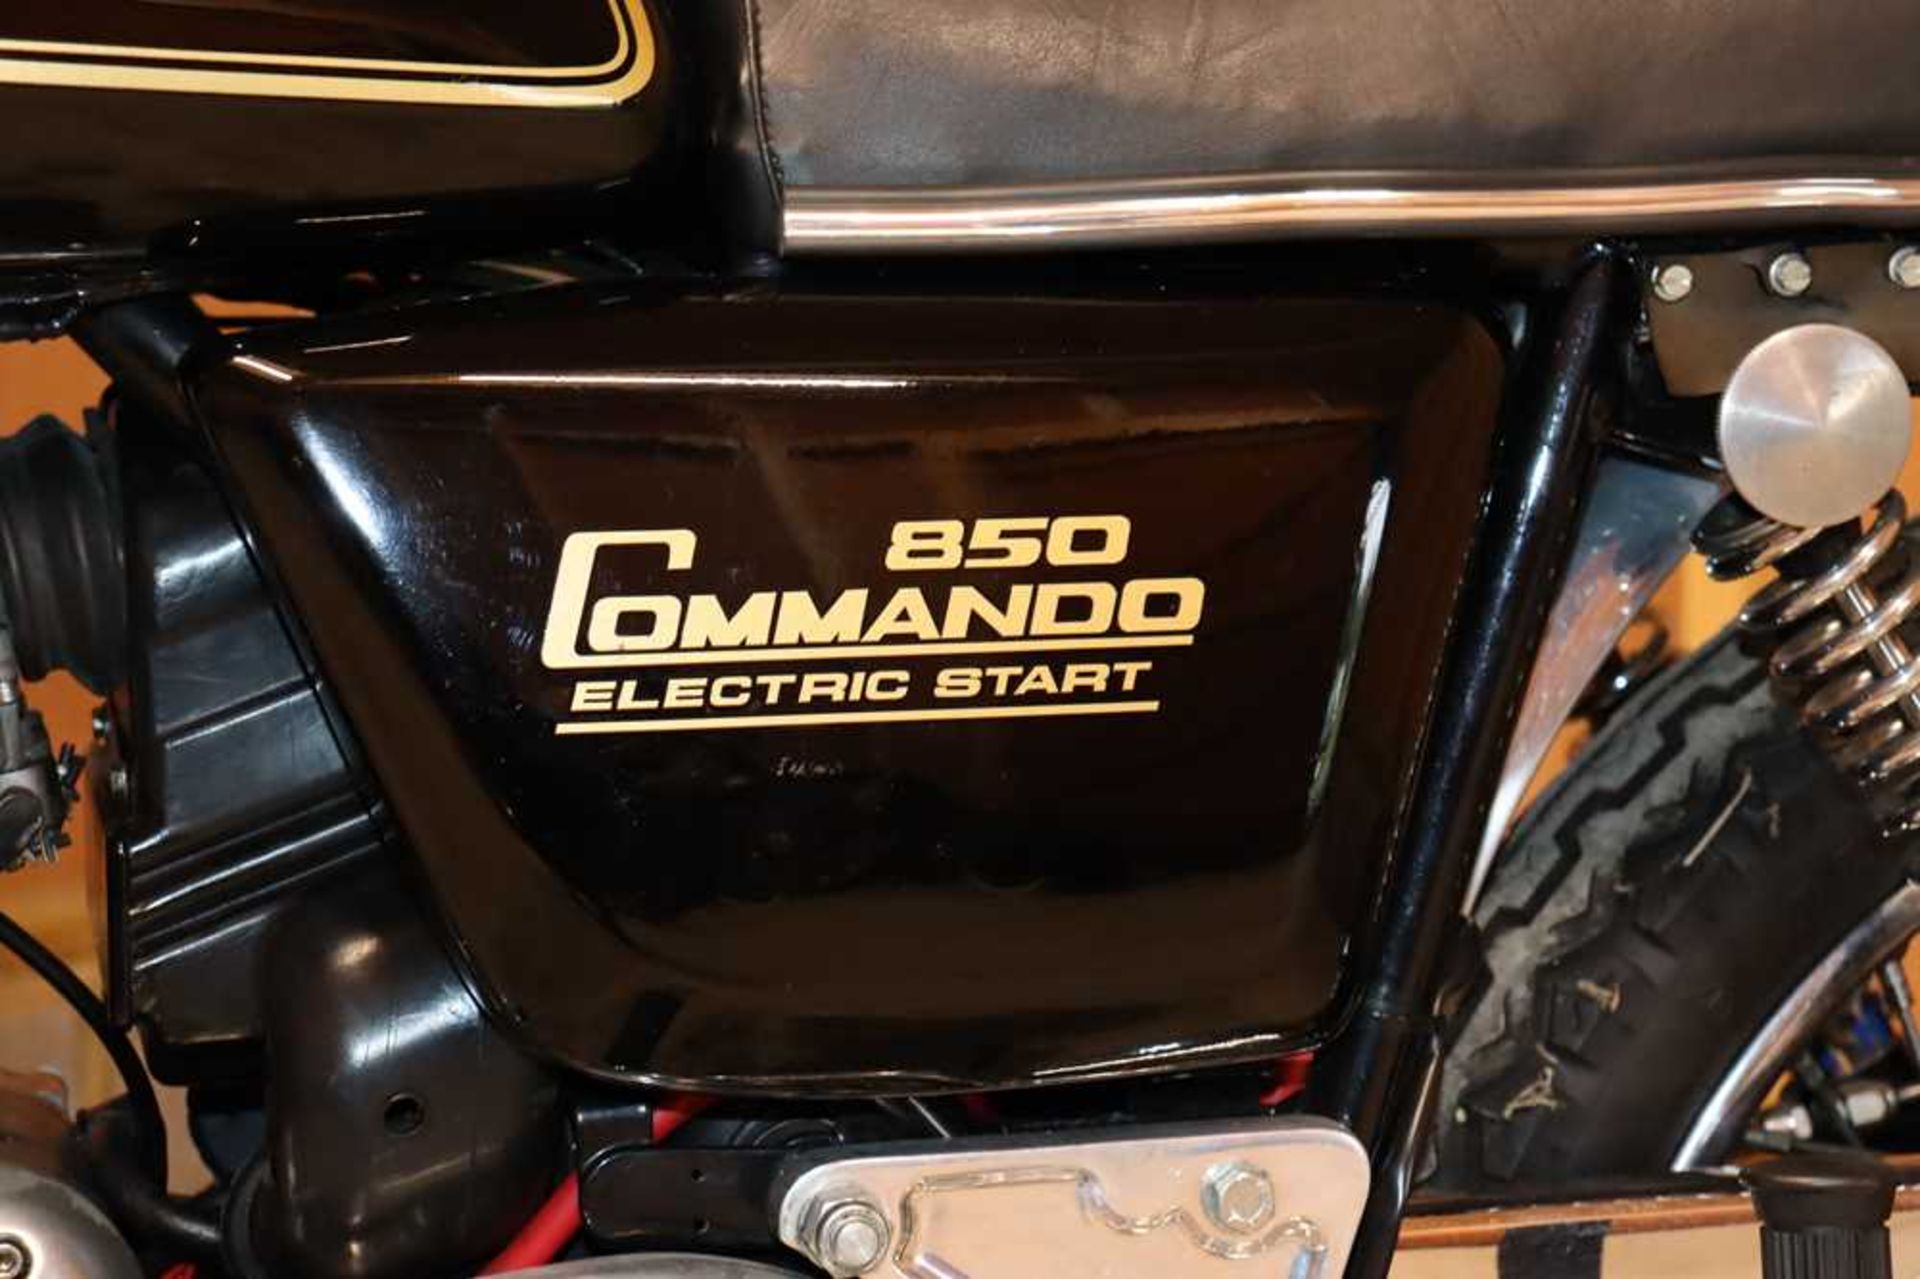 1974 Norton Commando 850 - Image 53 of 64